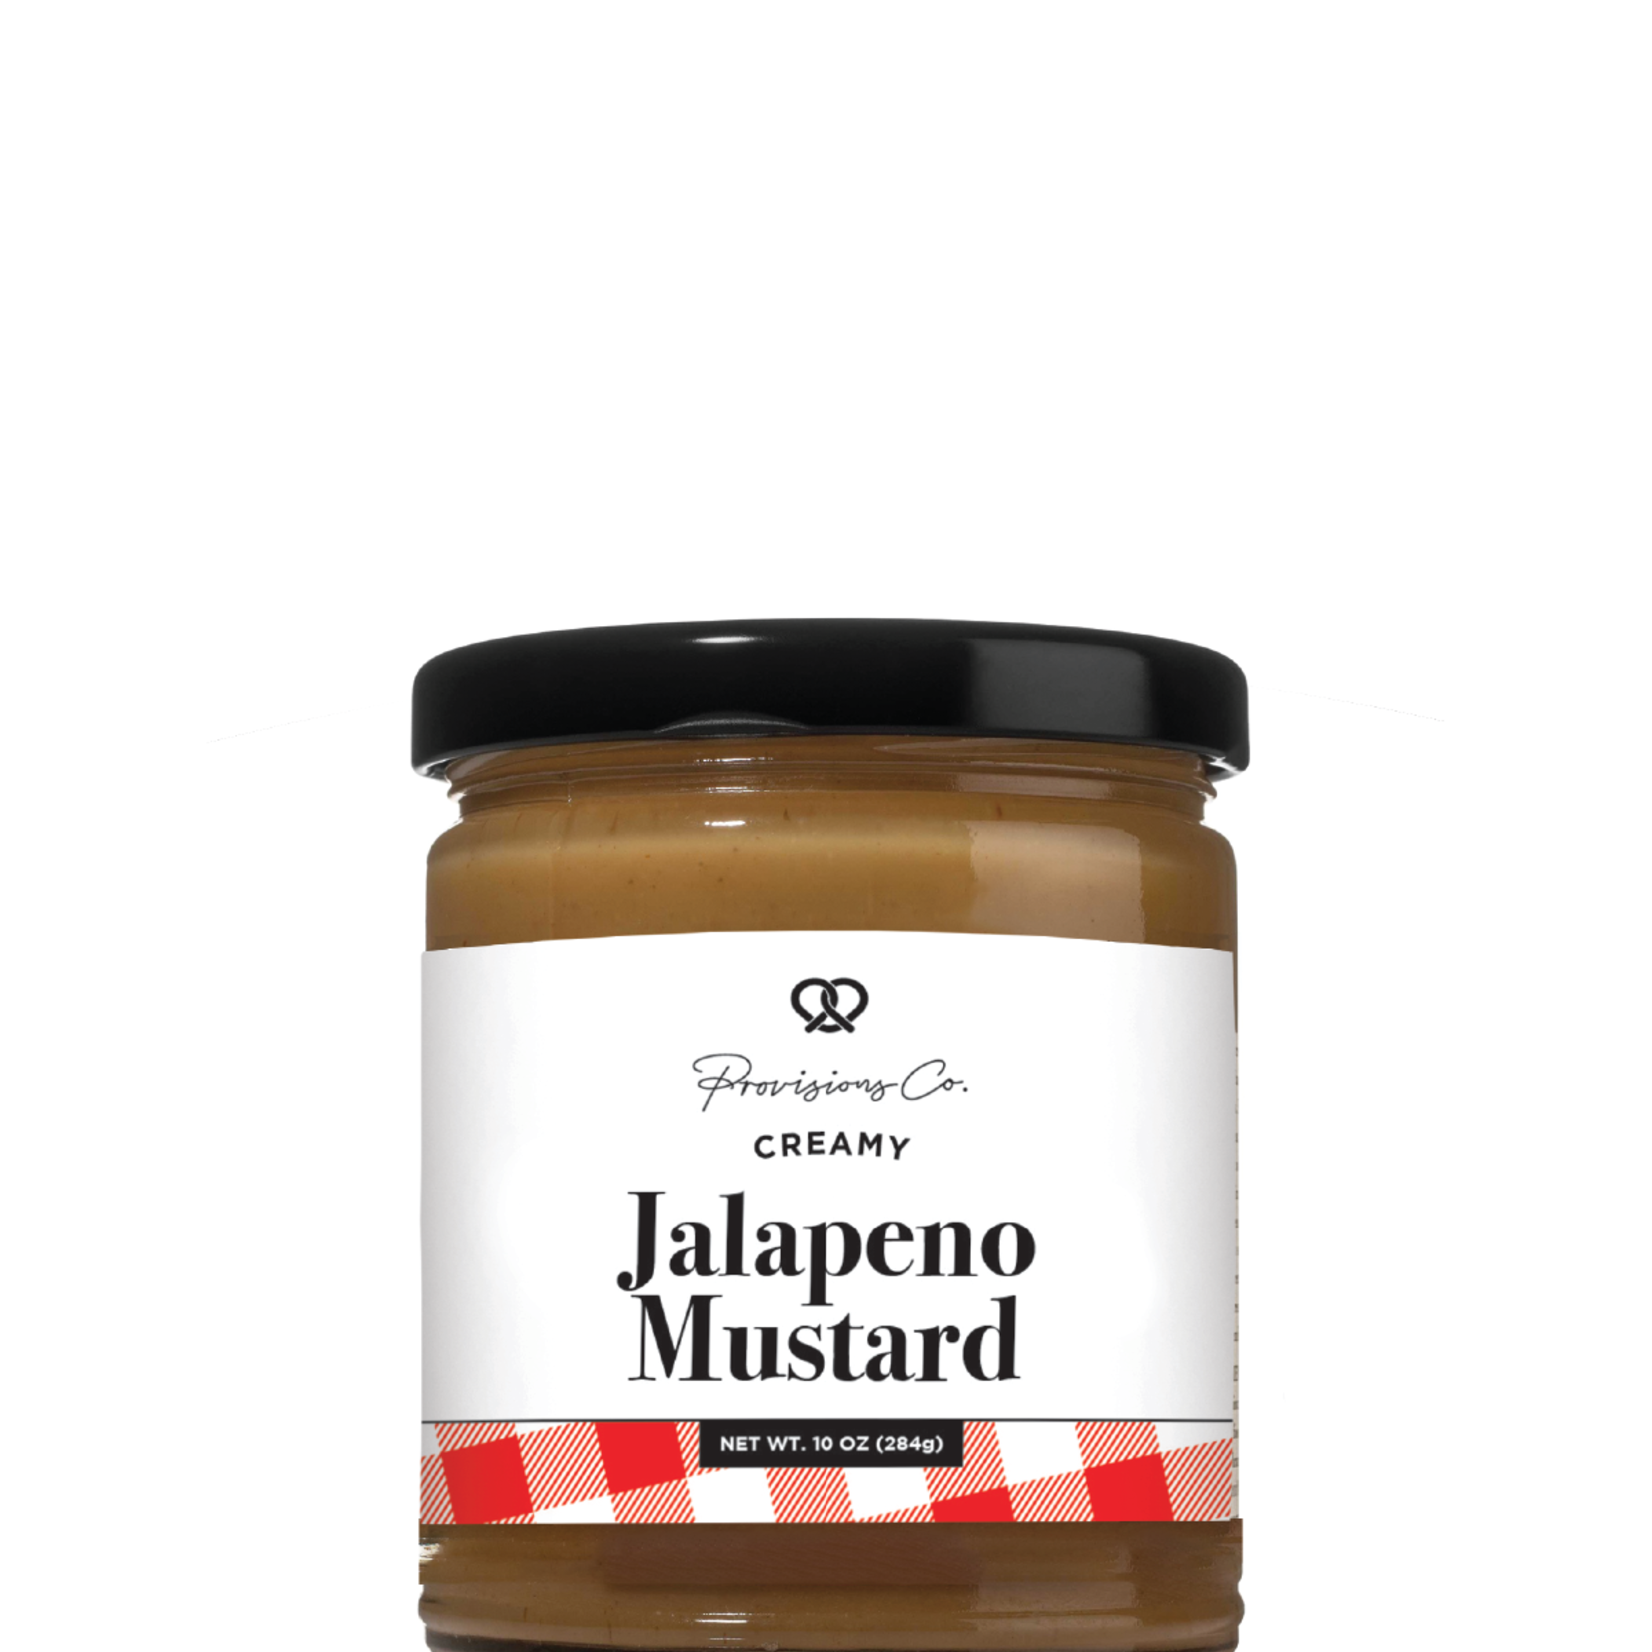 Provisions Co. Jalapeño Mustard